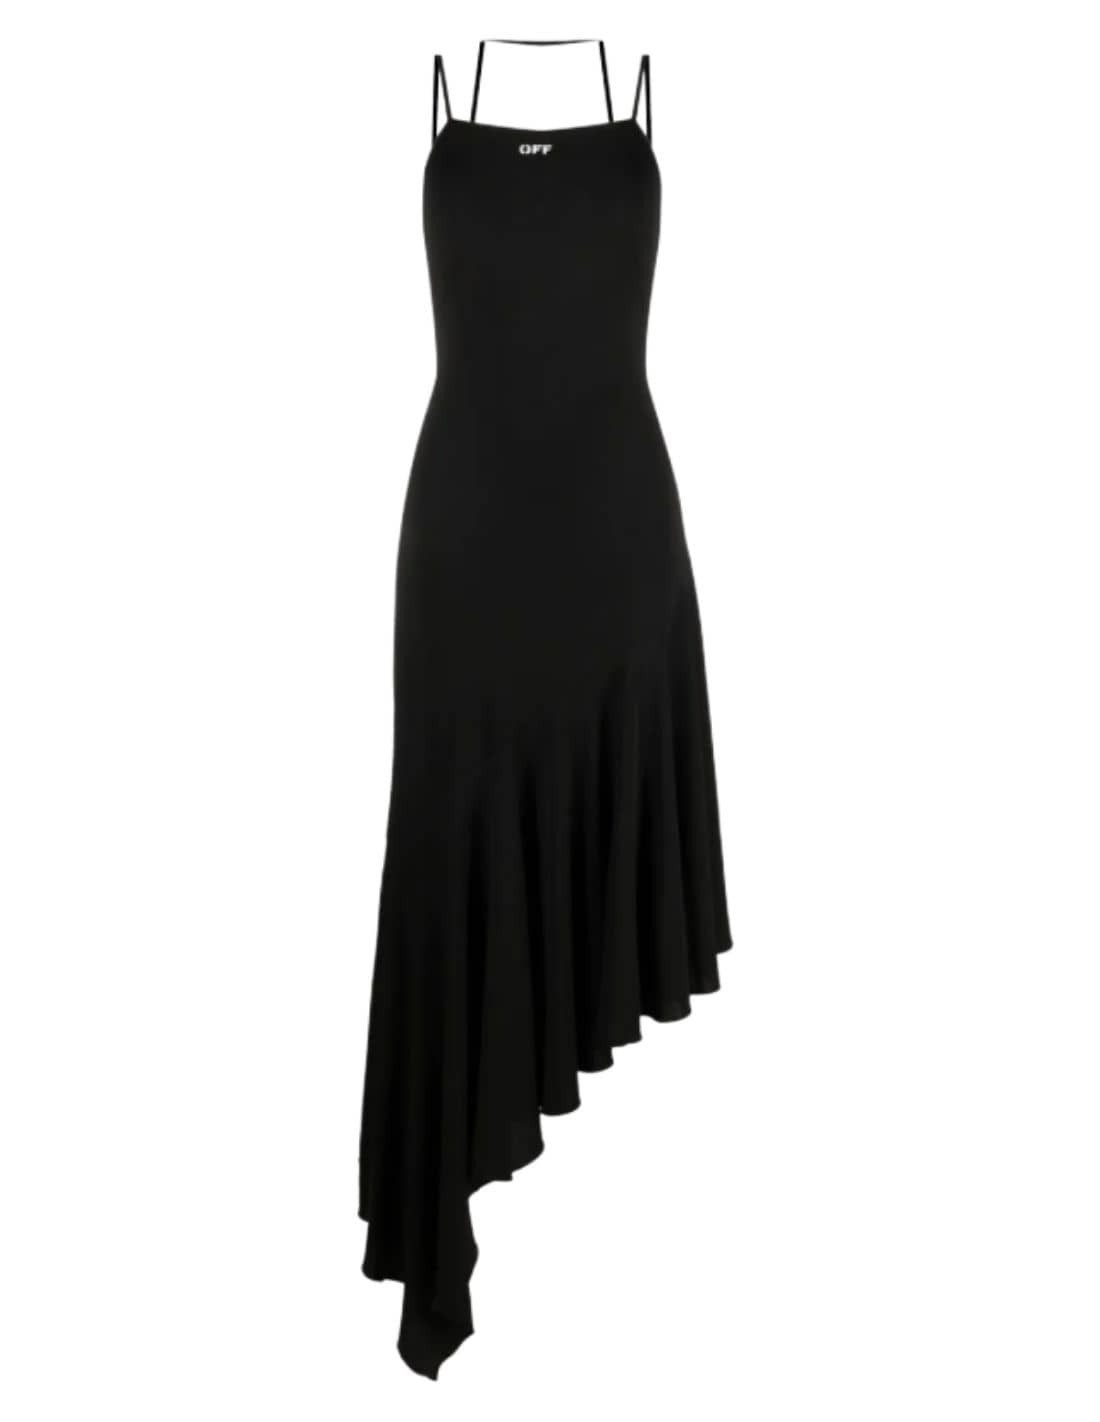 Long OFF-WHITE asymmetrical black dress with straps - SS21